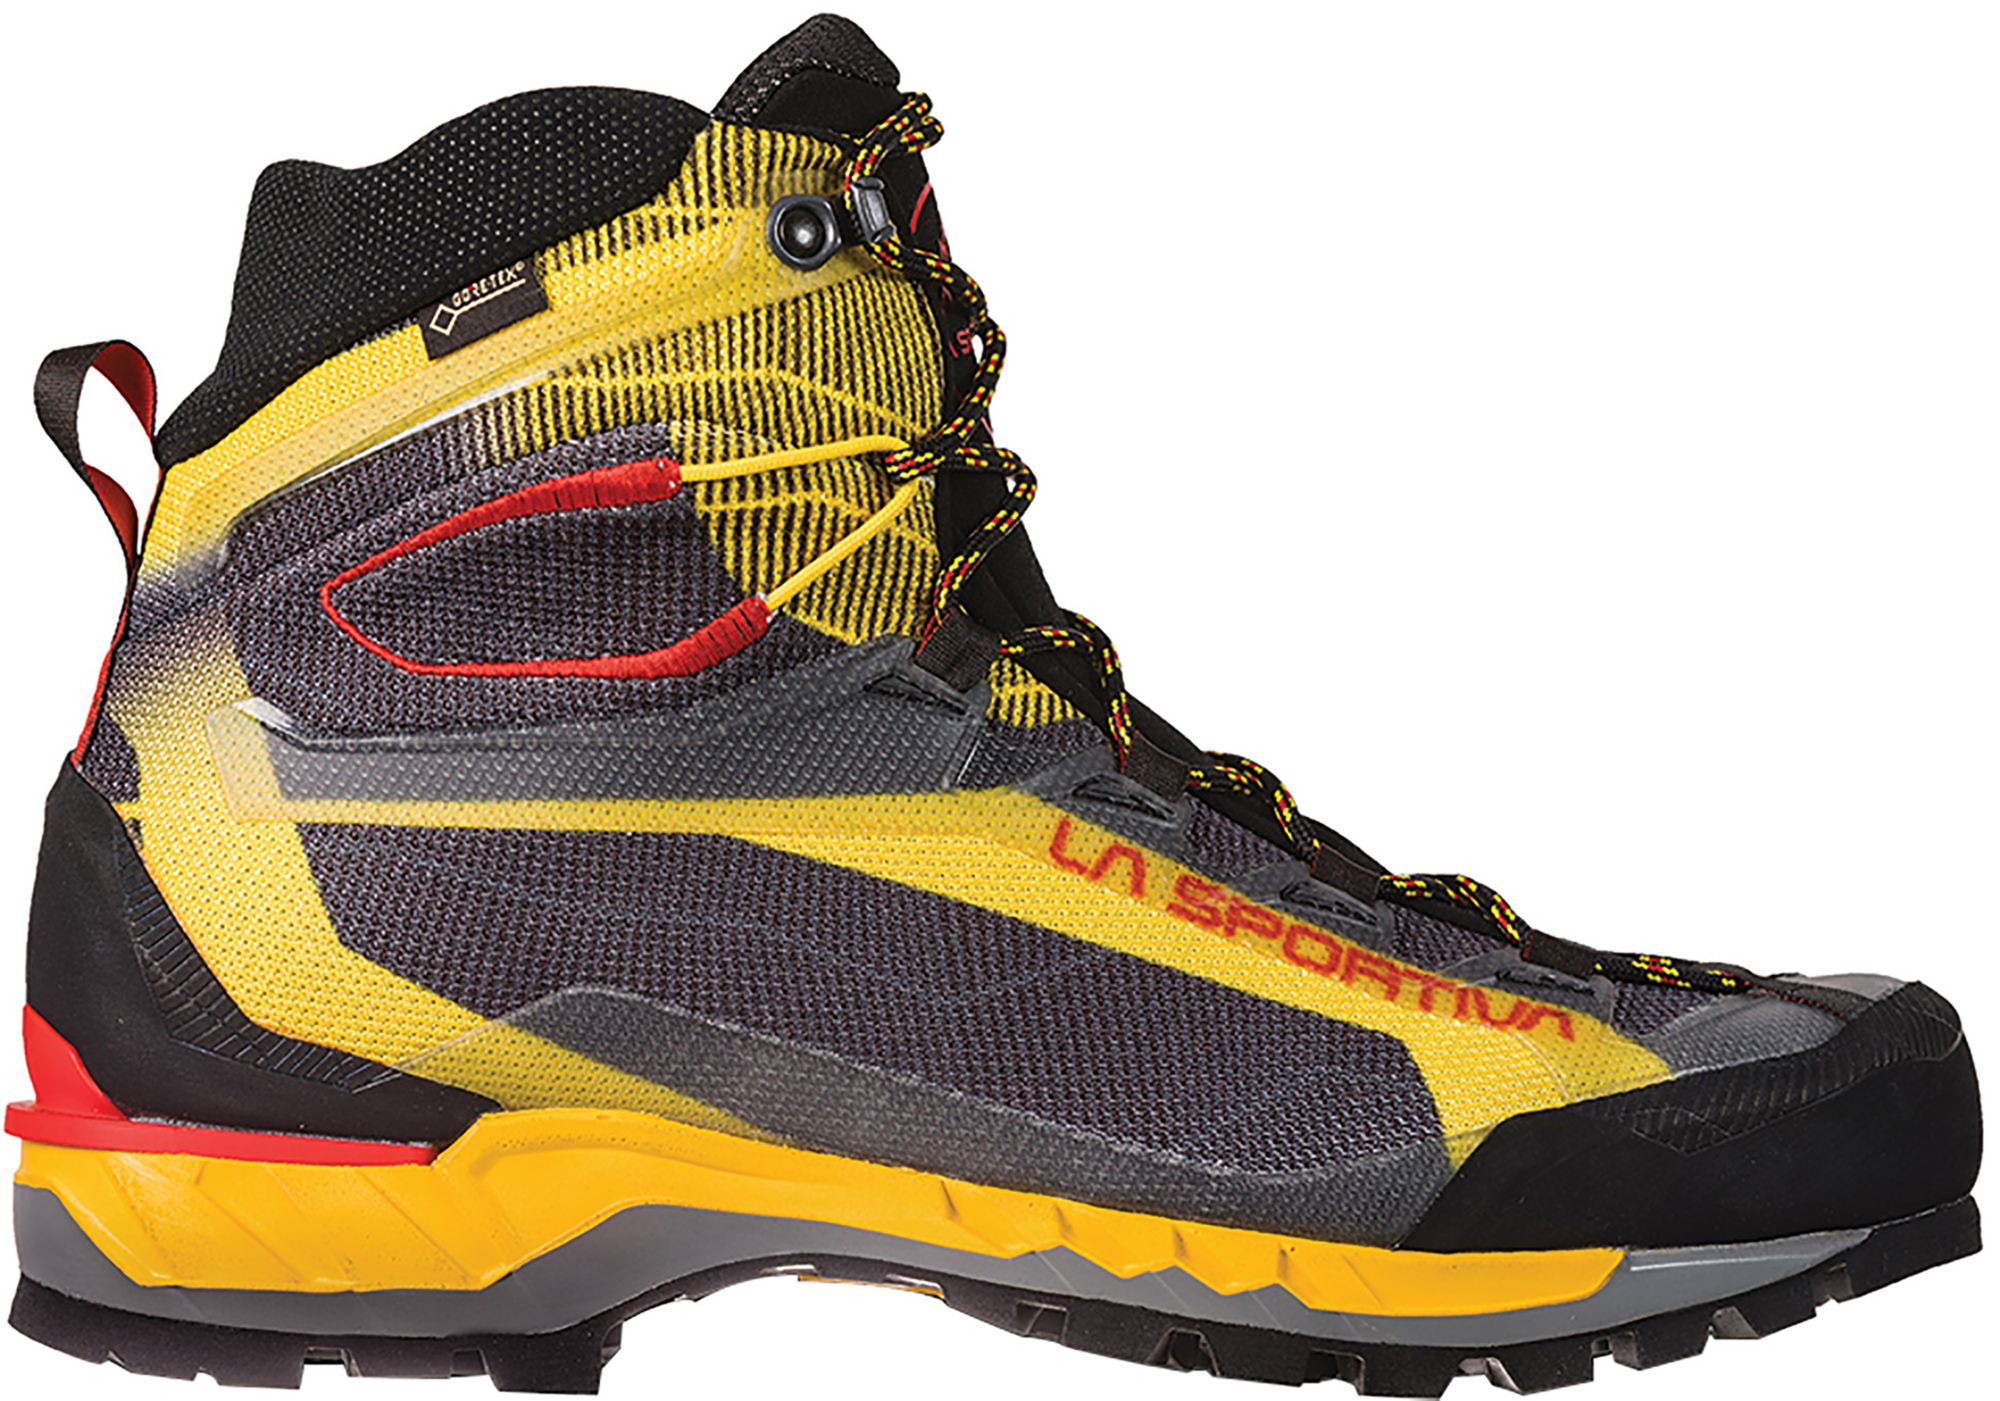 Photos - Trekking Shoes La Sportiva Men's Trango Tech GTX Hiking Boots, Size 46, Black/Yellow 21QP 